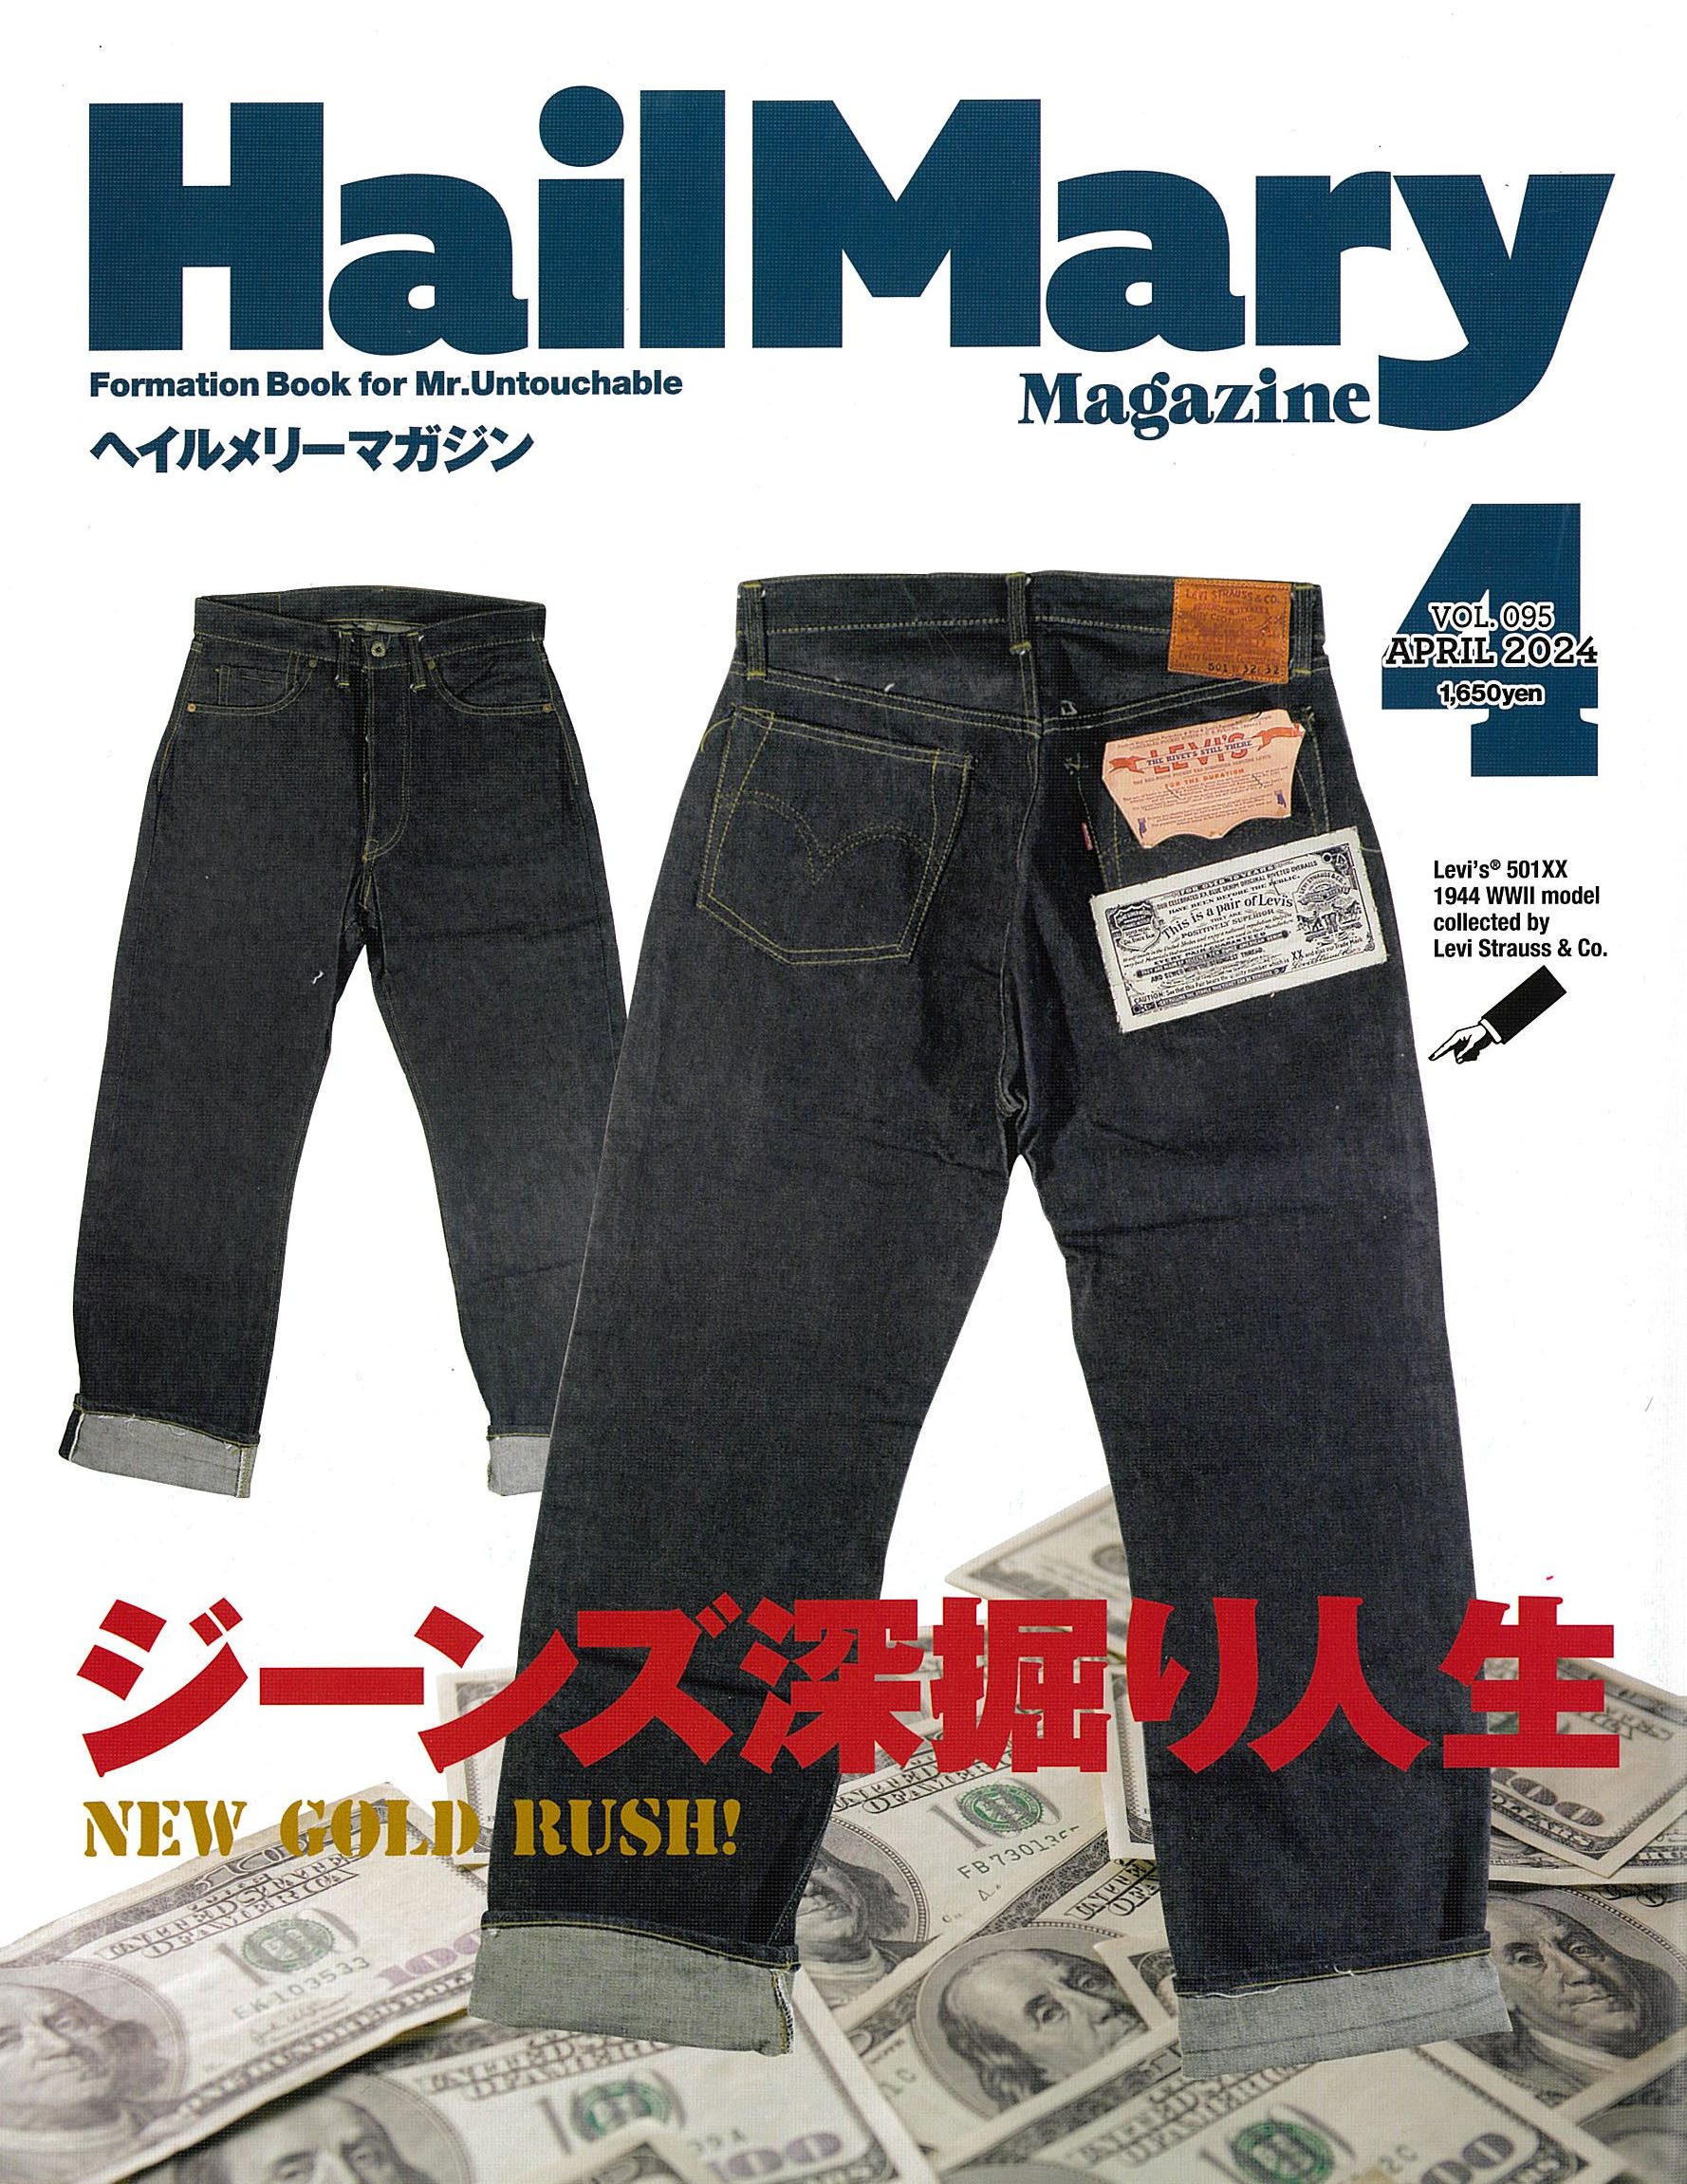 HailMary Magazine